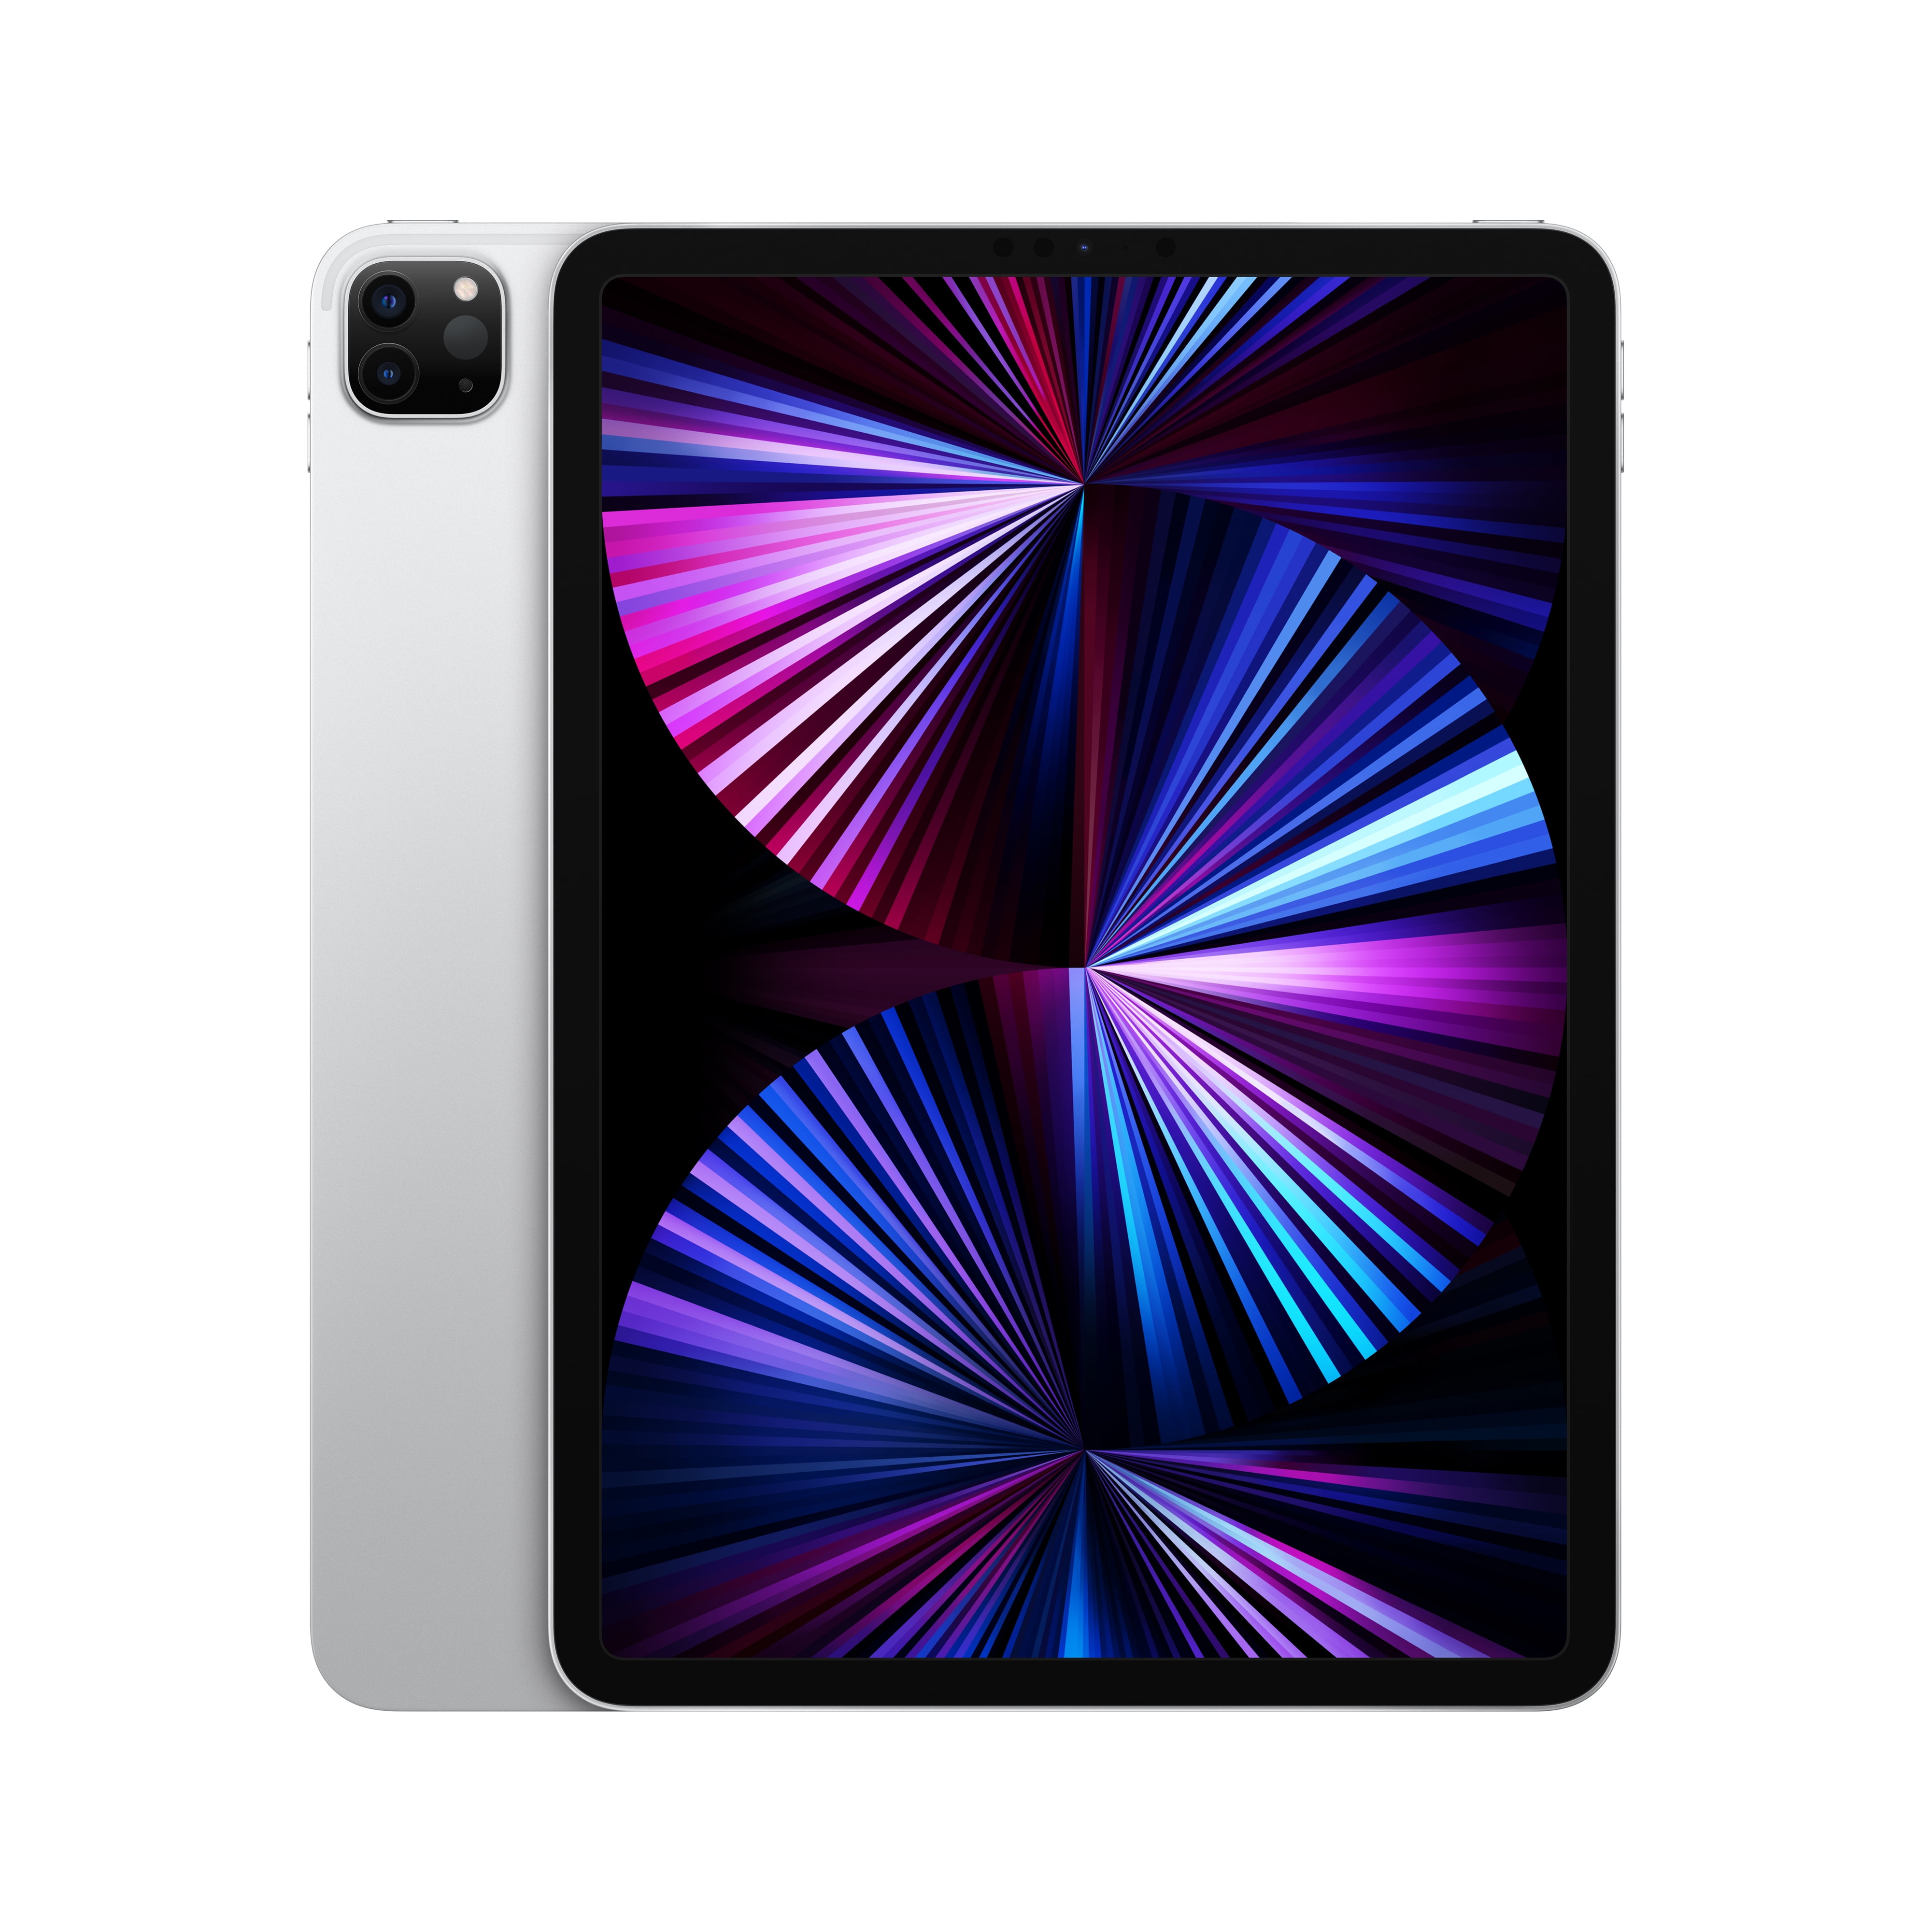 Apple iPad Pro 11-inch (2021) specs - PhoneArena